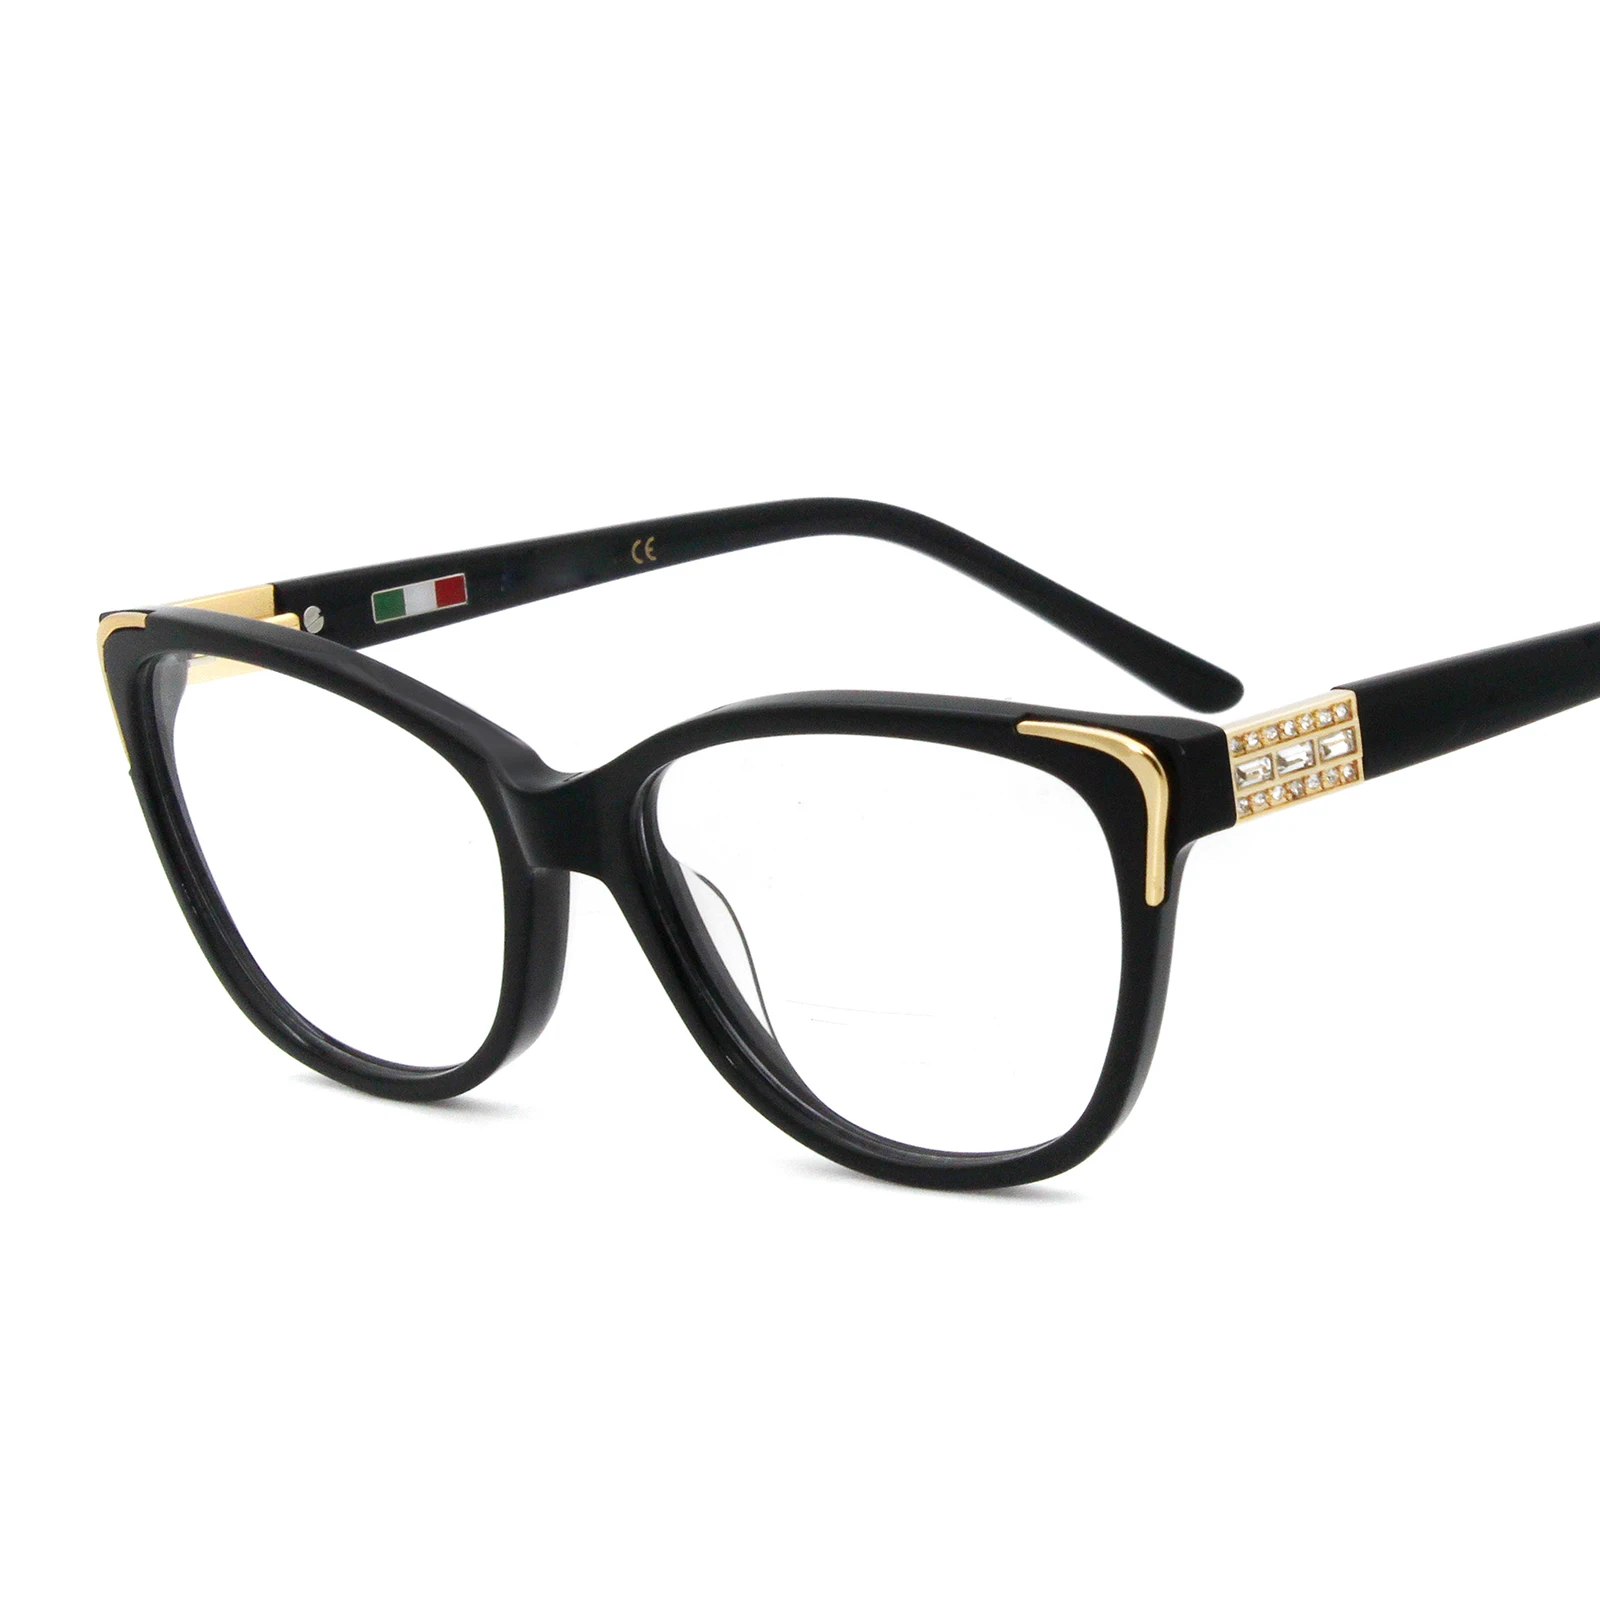 

Eyewear with rhinestones acetate sheet optical glasses frames cat eye eyeglasses frames ready stock optic woman eyeglass frames, Black/demi/red